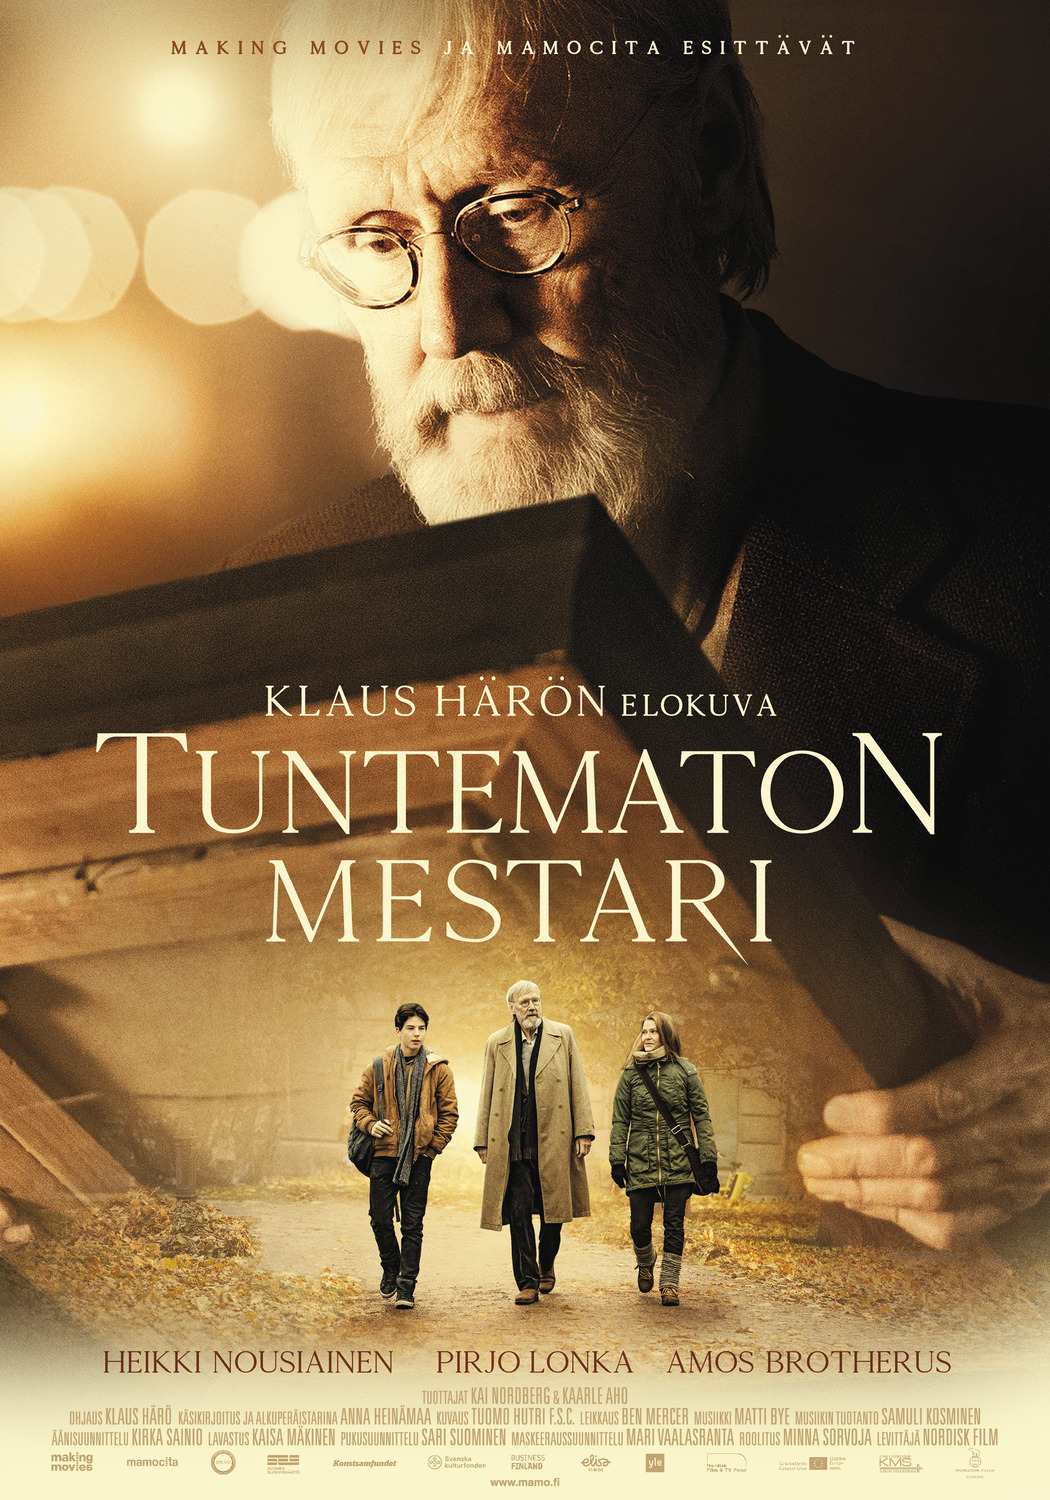 Extra Large Movie Poster Image for Tuntematon mestari 